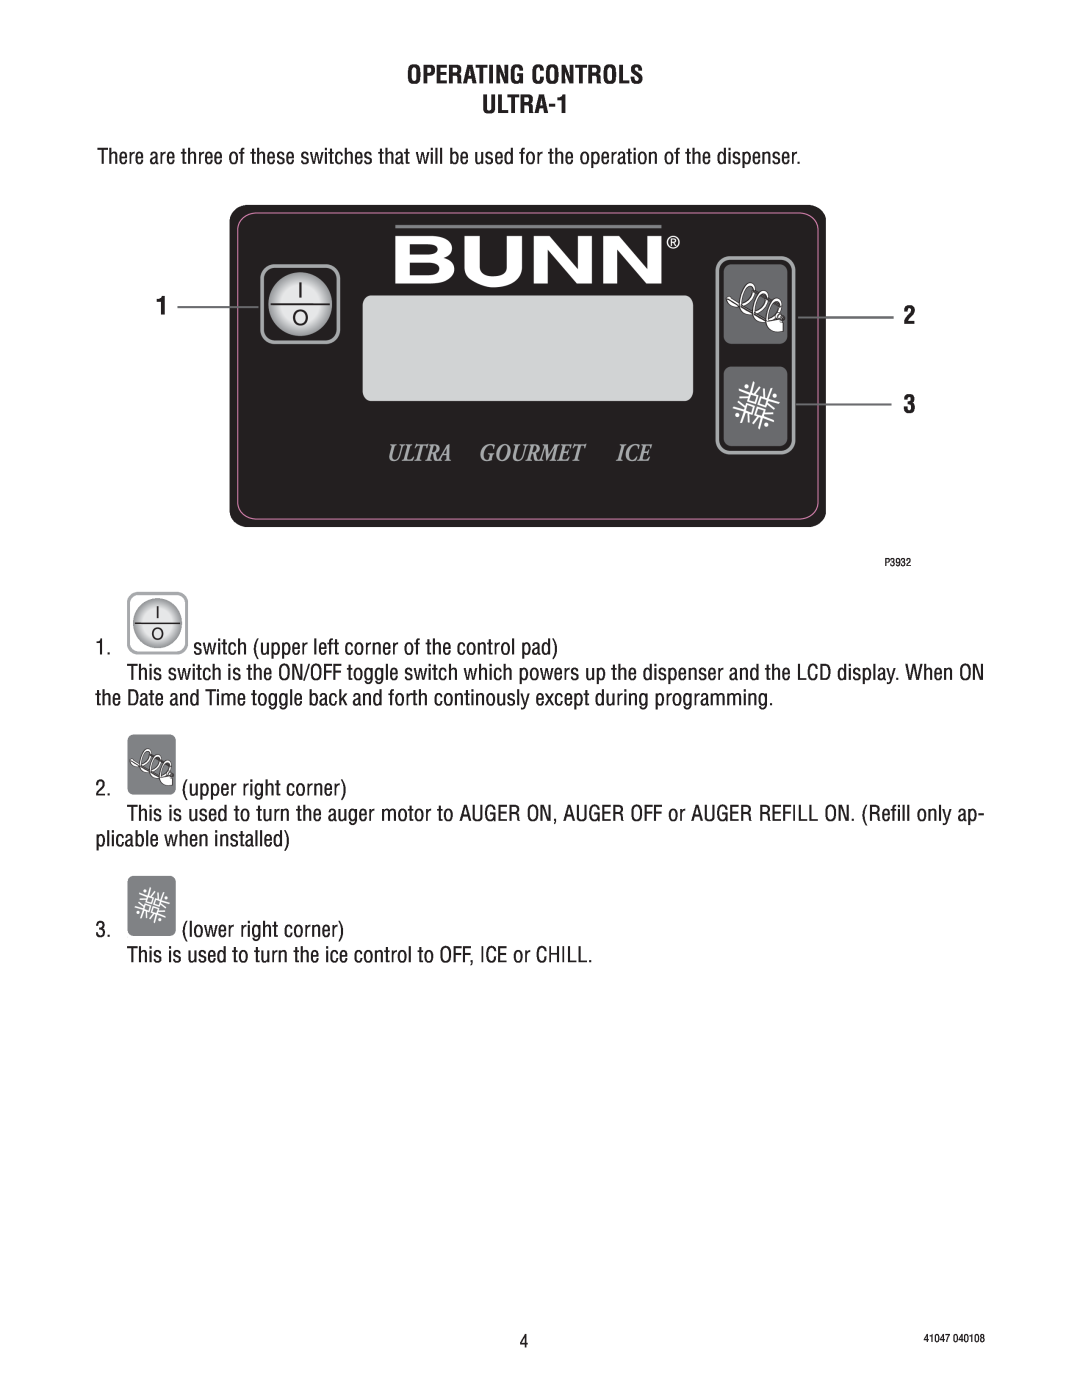 Bunn manual OPERATING CONTROLS ULTRA-1 